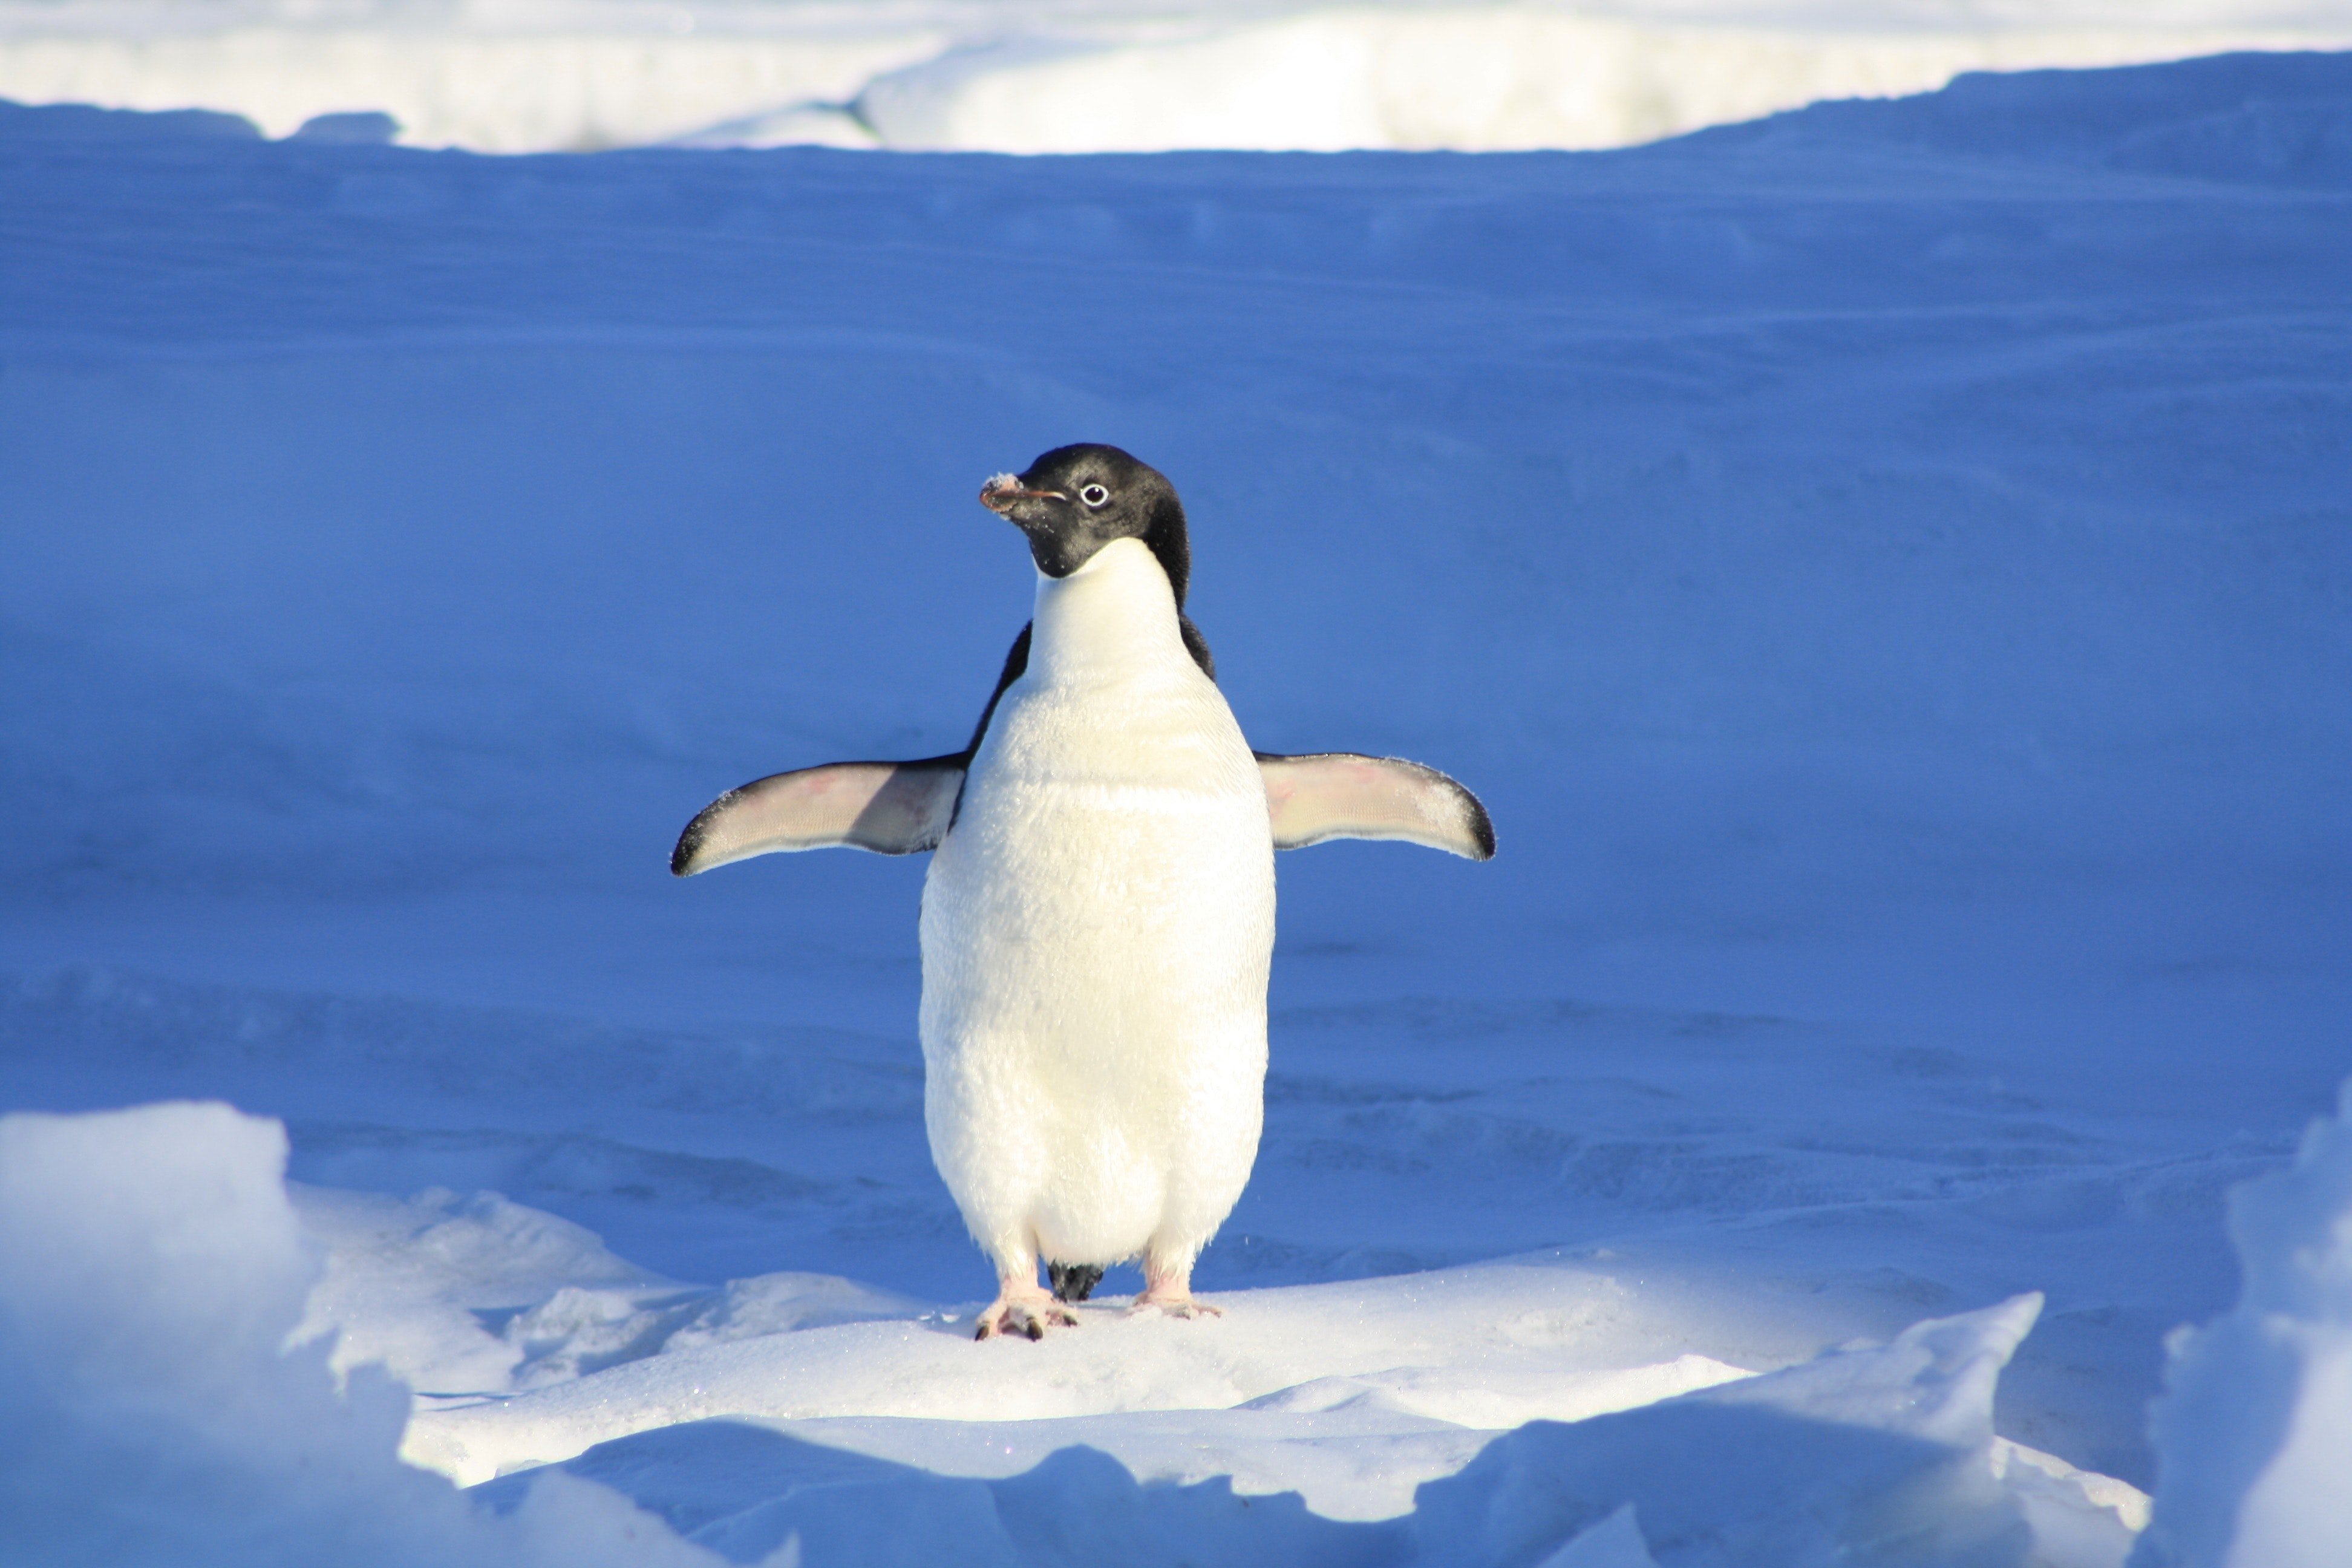  penguin standing on snow. | Pexels/ Pixabay